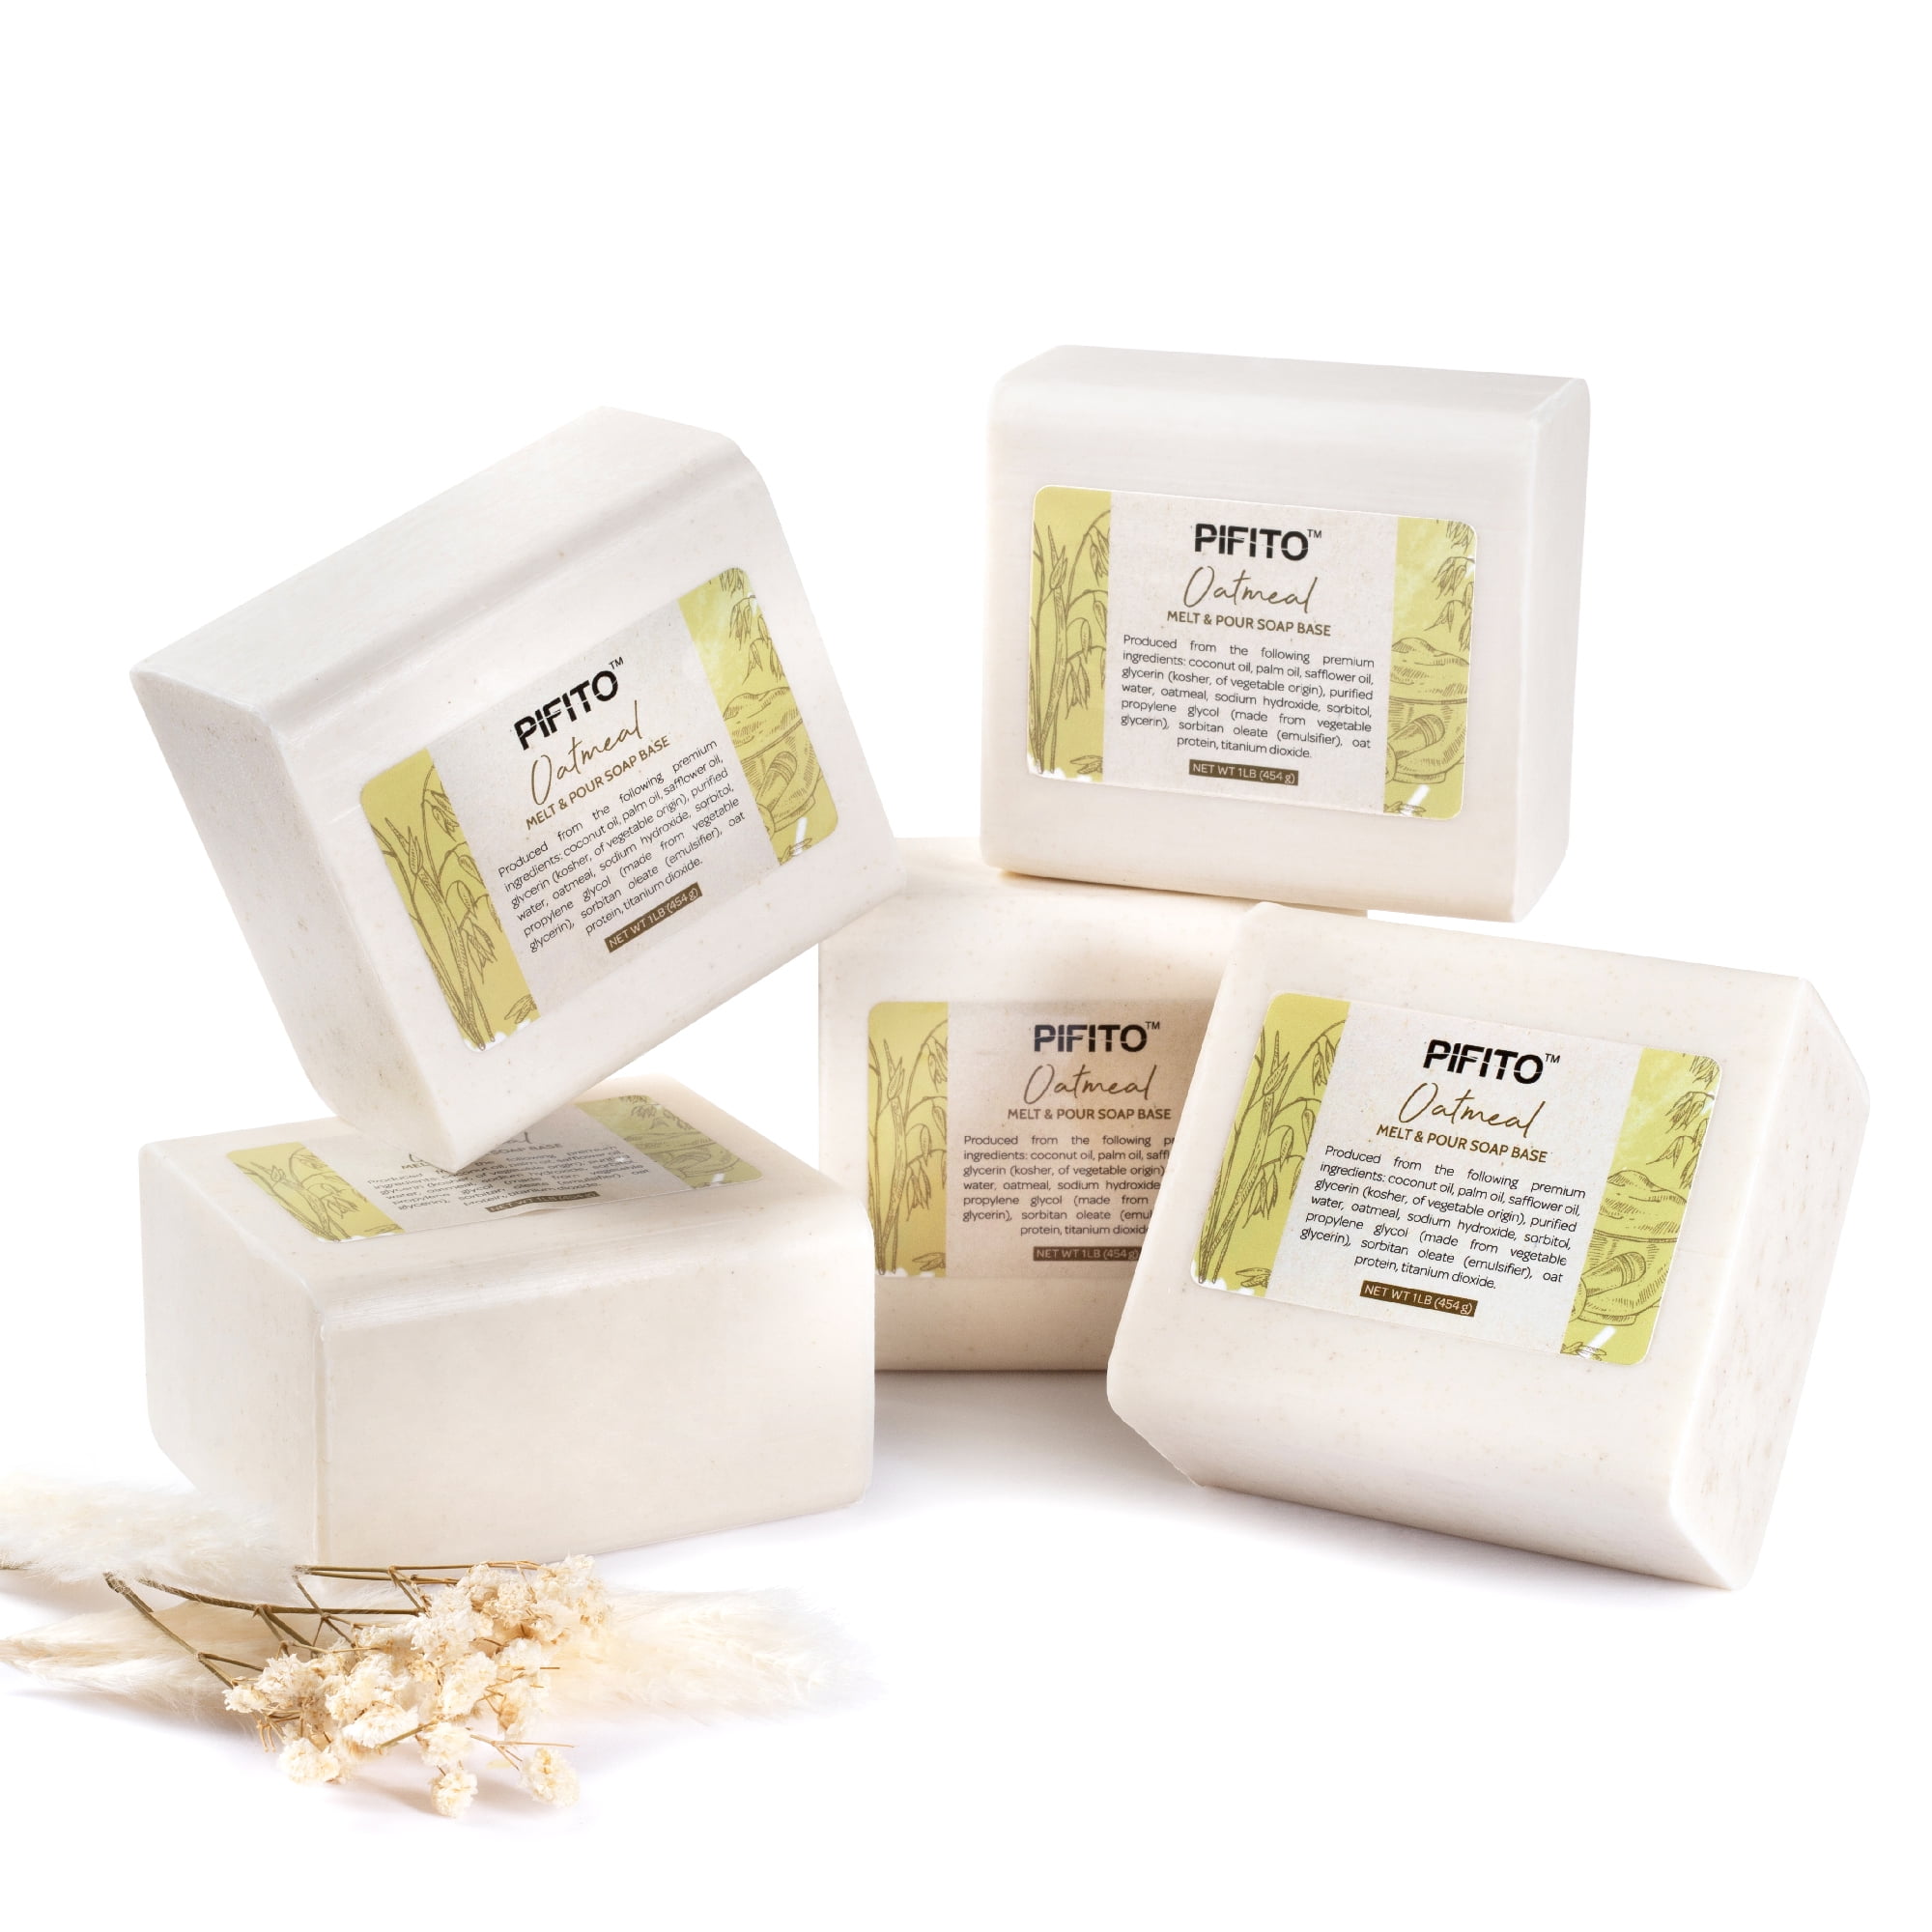 Pifito Oatmeal Melt and Pour Soap Base (5 lb) │ Bulk Premium 100% Natural Glycerin  Soap Base │ Luxurious Soap Making Supplies 